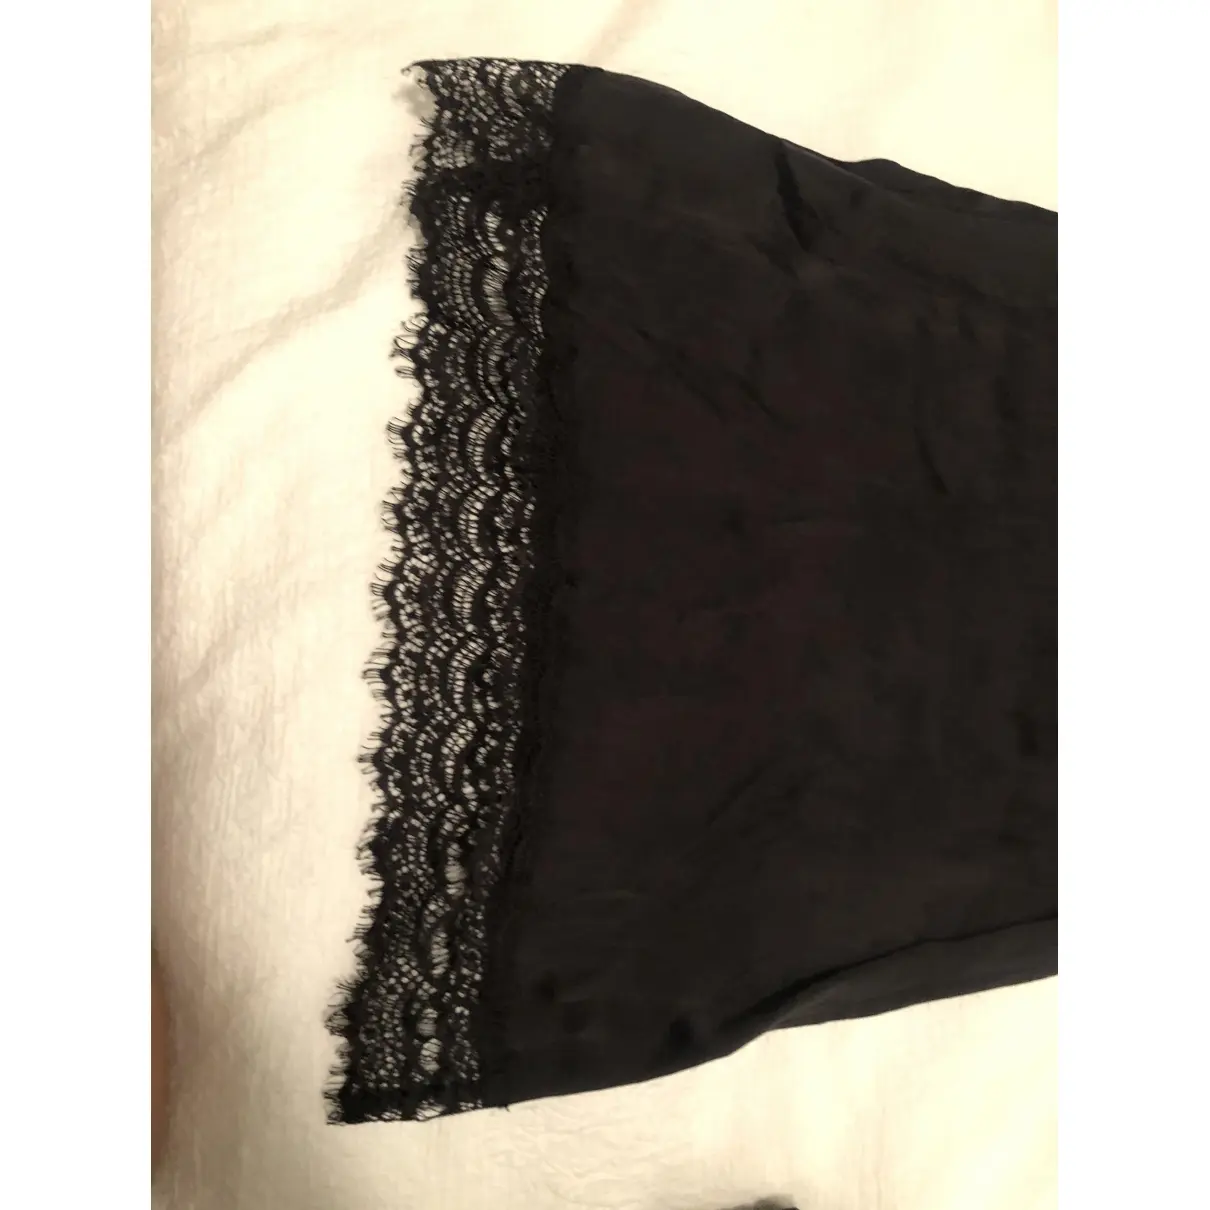 Buy Mimi Holliday Silk lingerie online